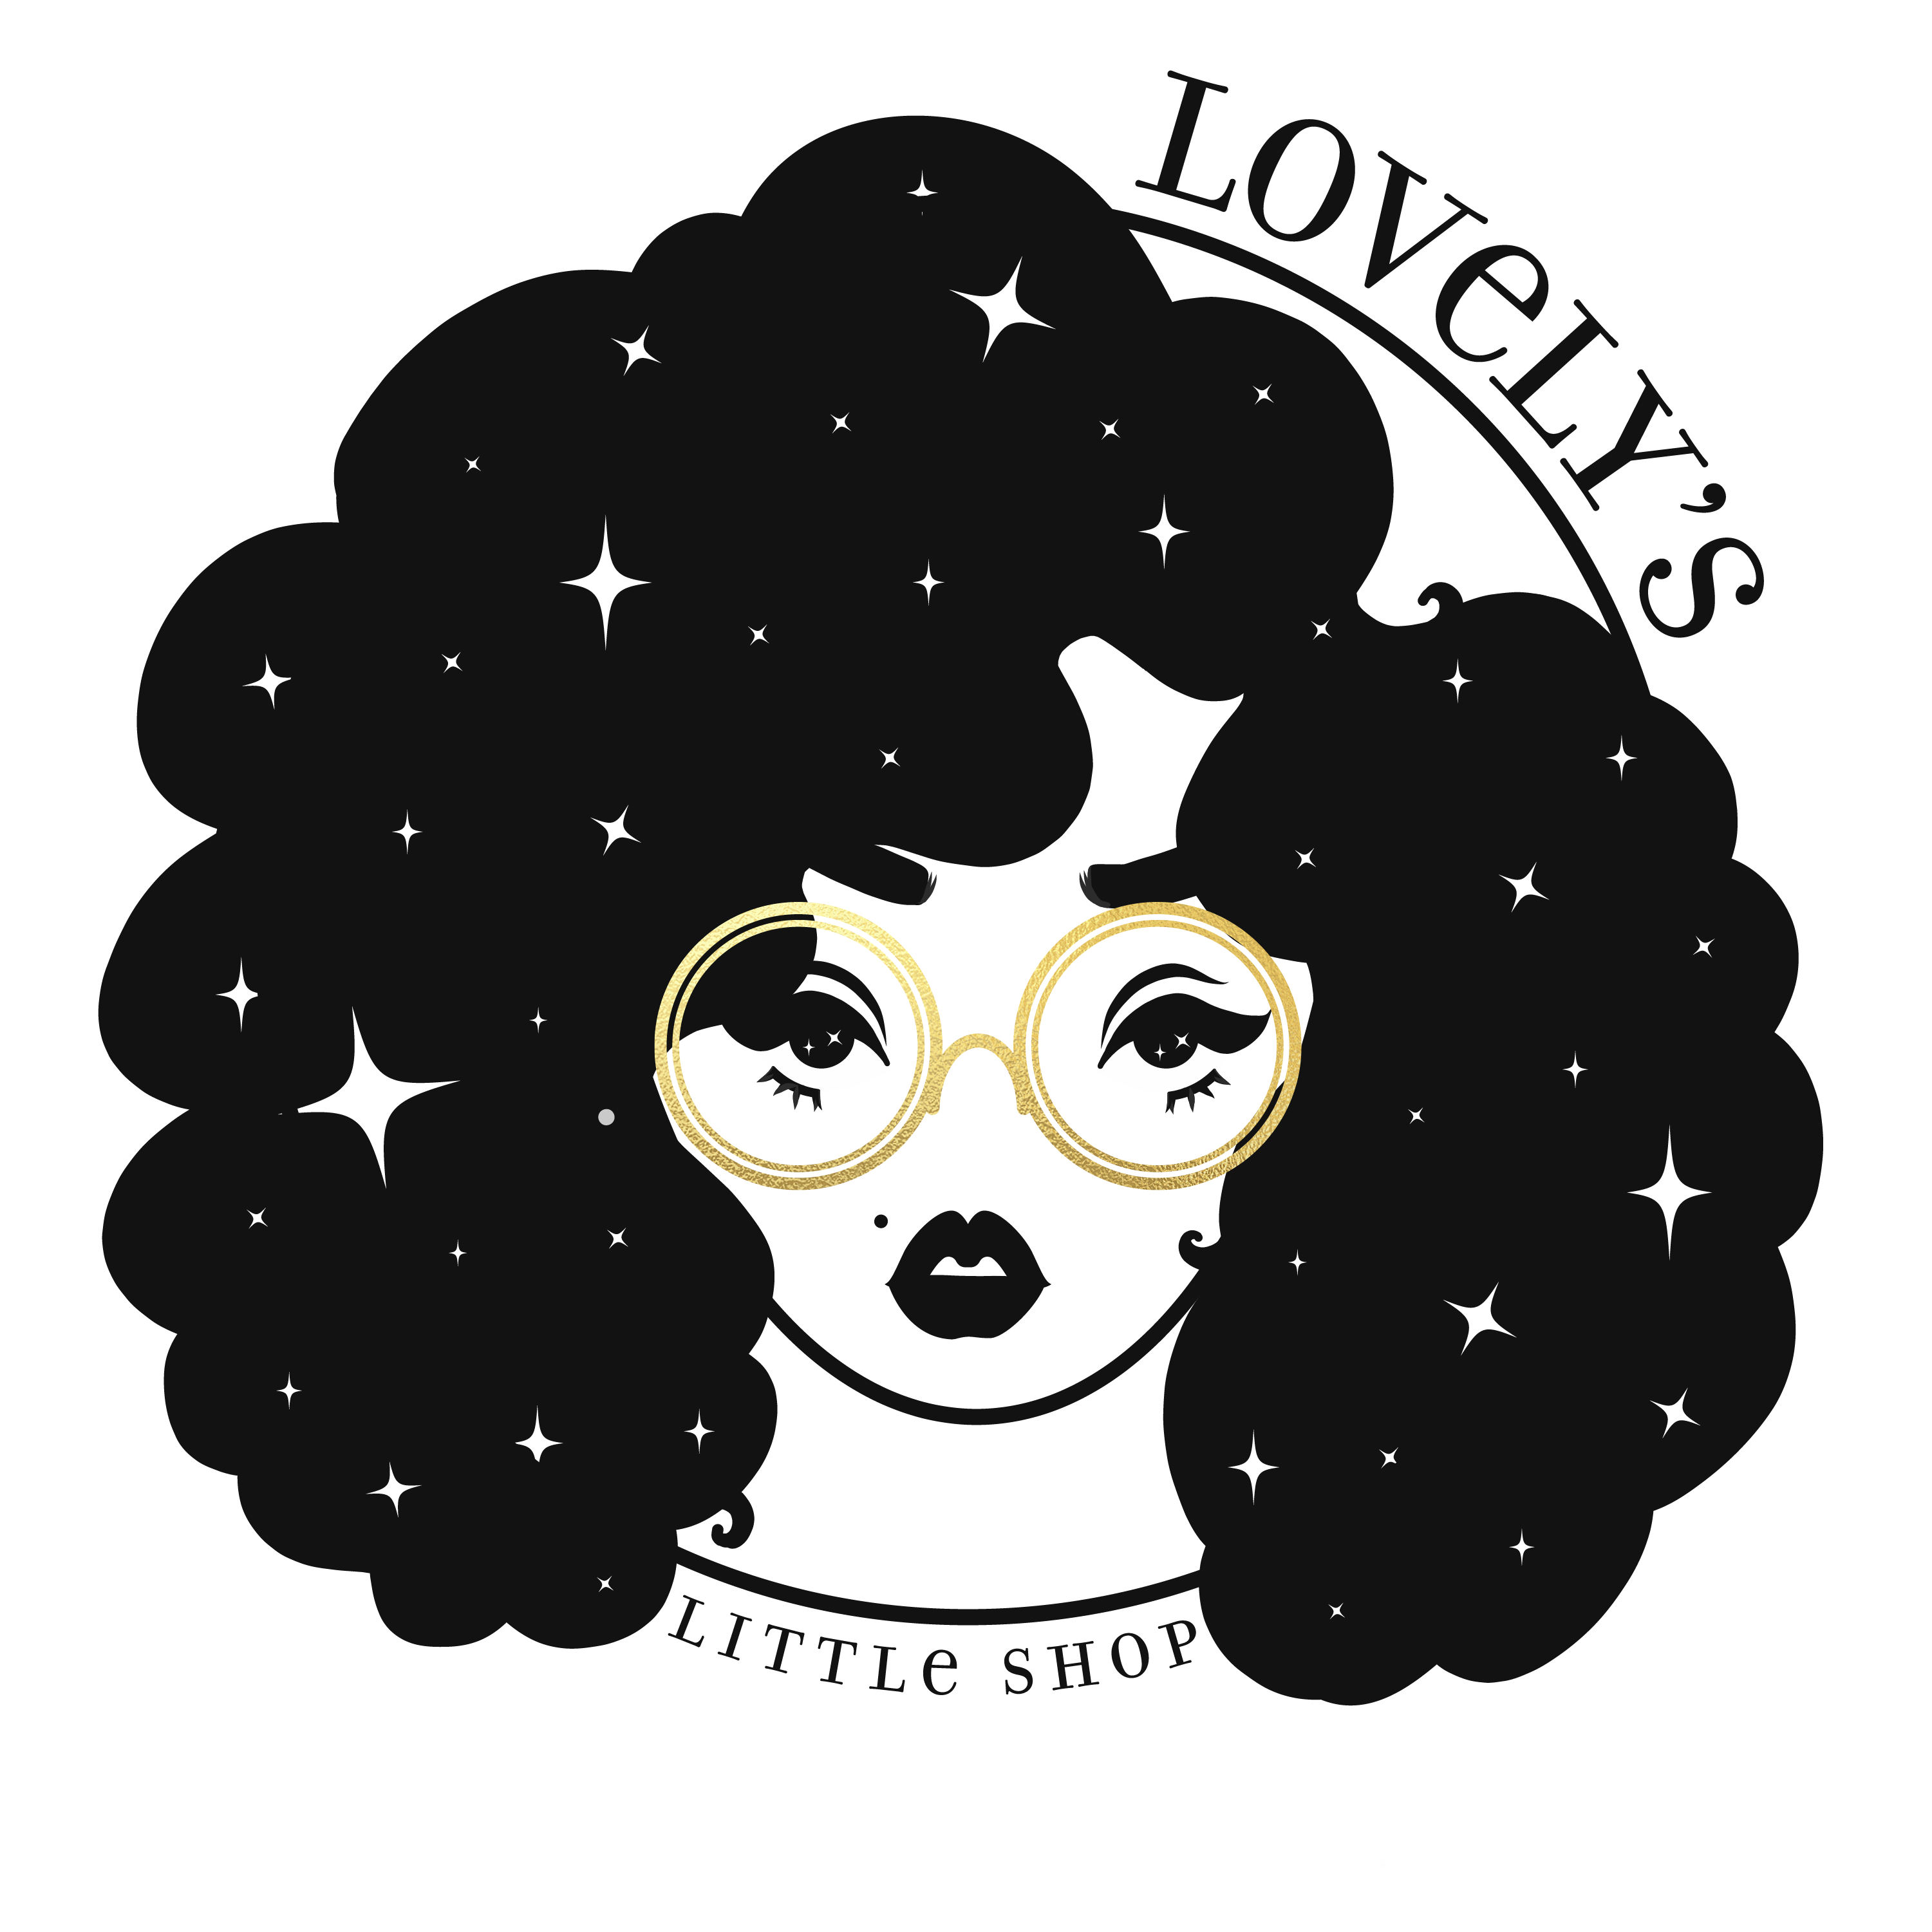 Lovely's Little Shop Logo Afro Girl With Glasses